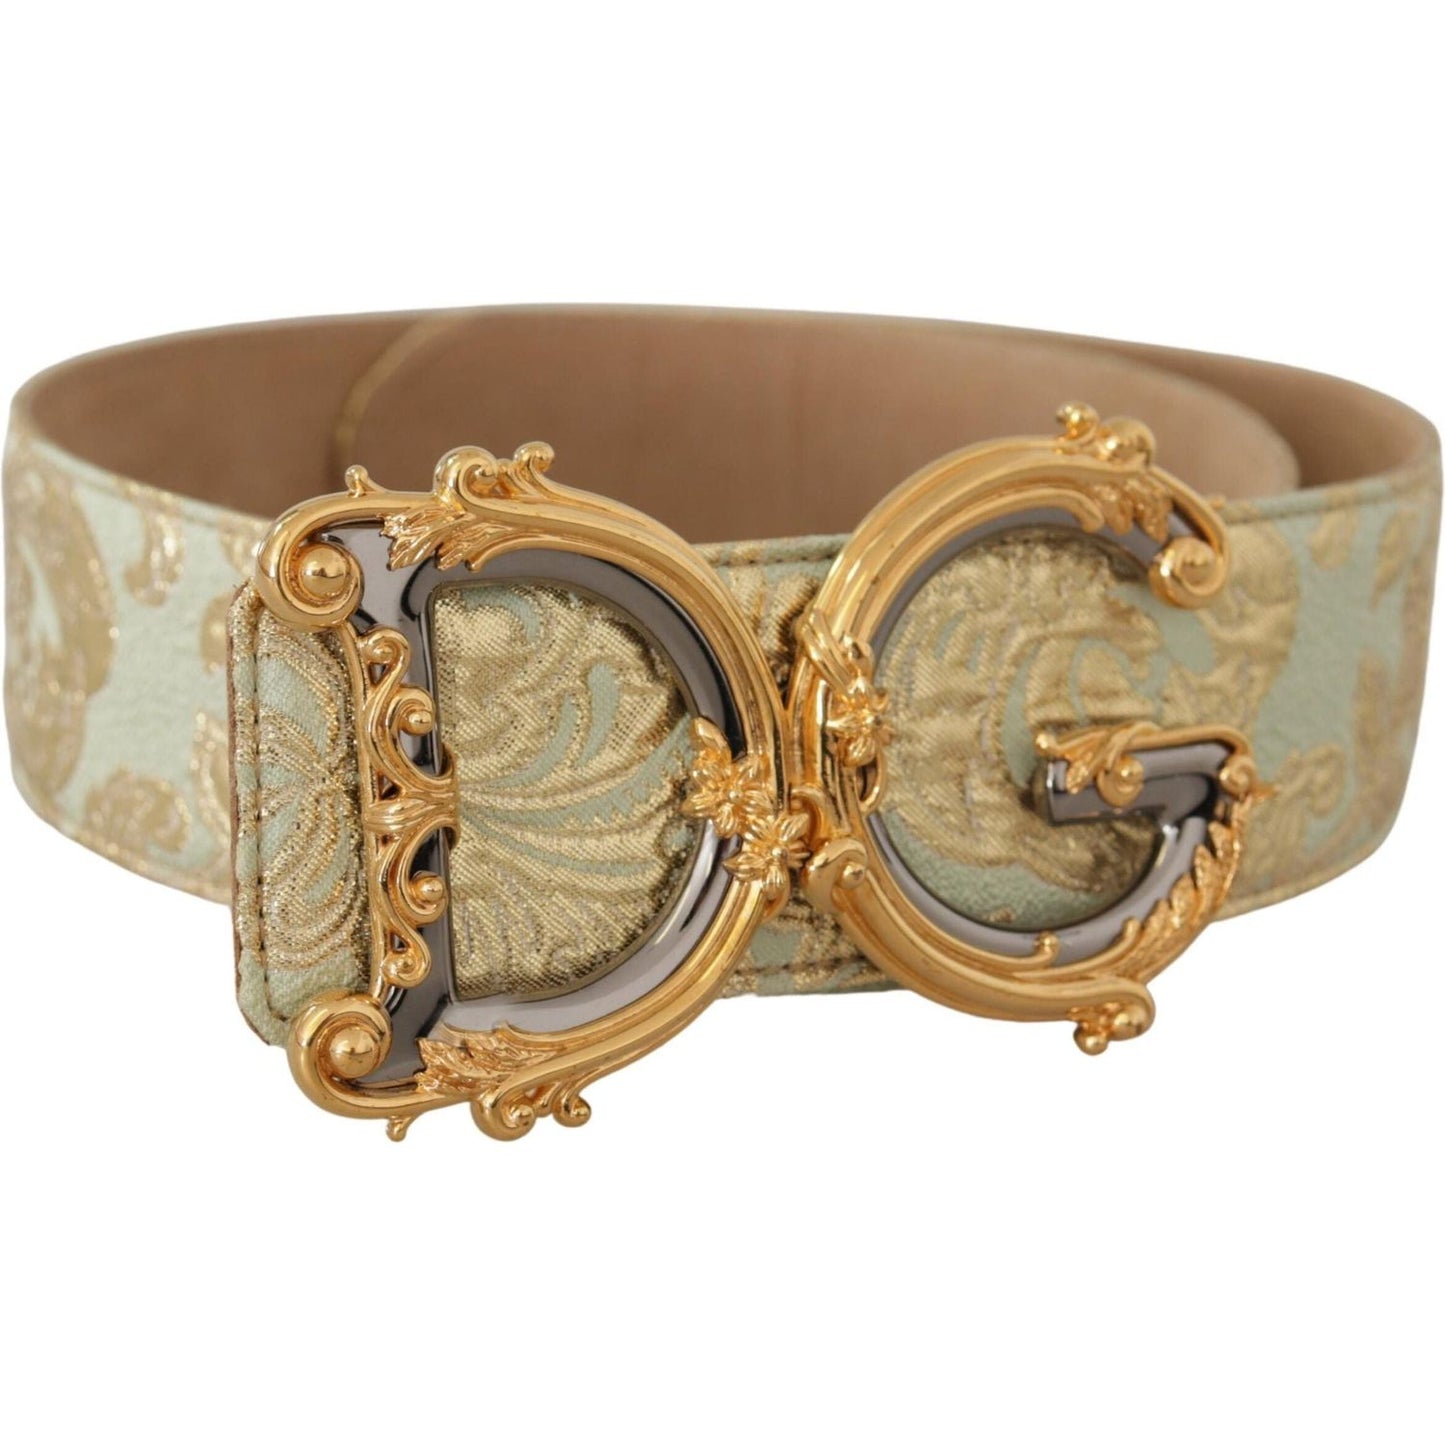 Dolce & Gabbana Engraved Buckle Leather Belt - Green & Gold green-wide-brocade-jacquard-dg-logo-gold-buckle-belt IMG_9137-2-scaled-6e4f5b66-2b8.jpg